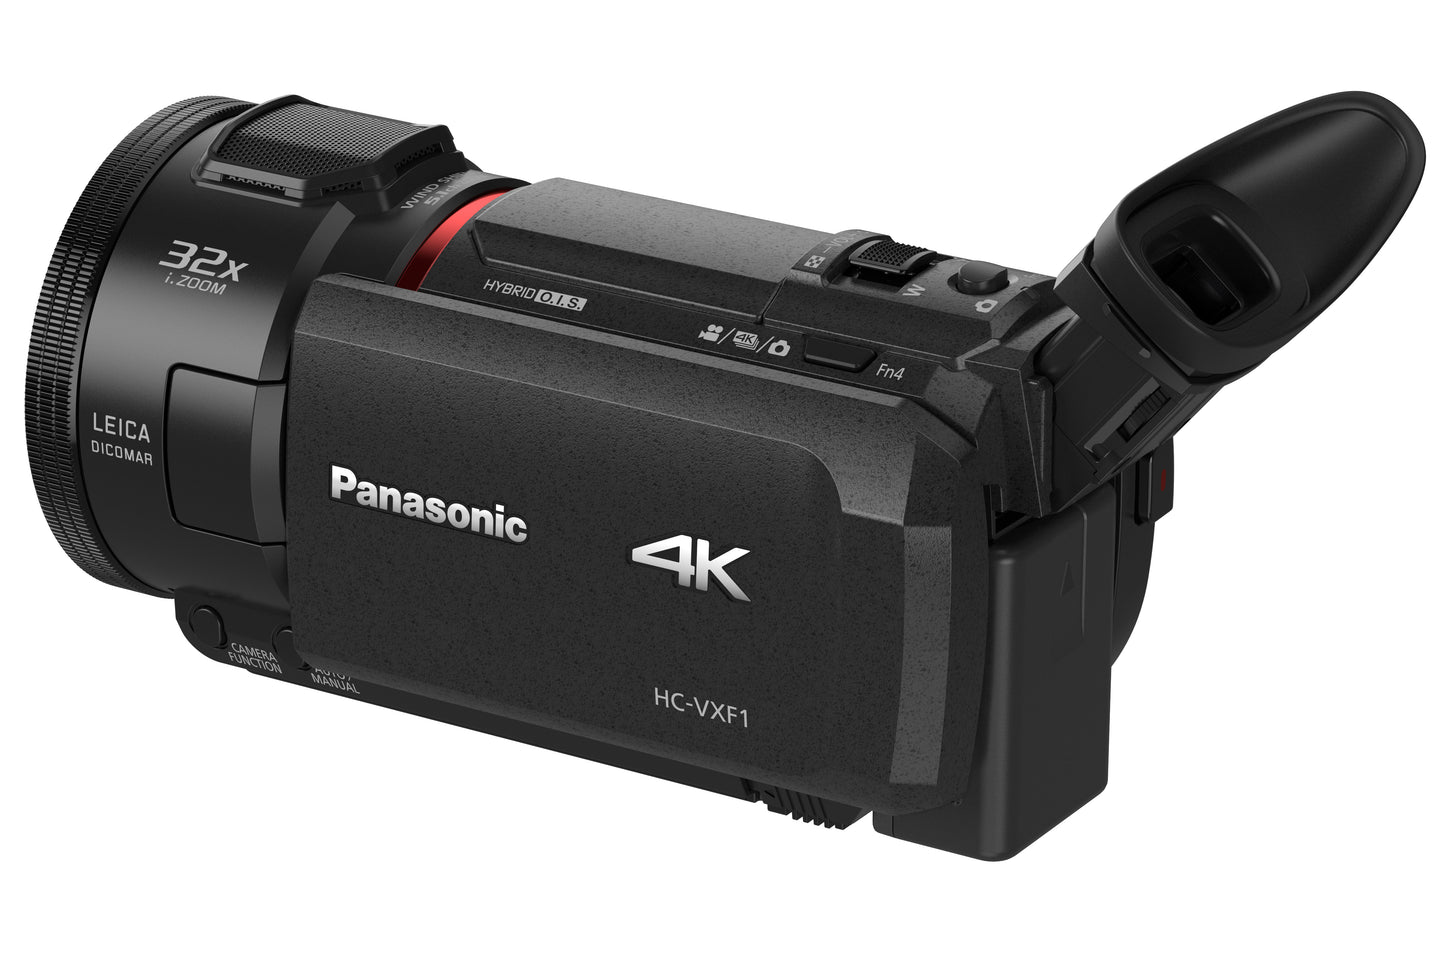 Panasonic HC-VXF1 4K Camcorder with 24x Optical Zoom, 3" LCD, WiFi & SD/SDHC/SDXC Compatibility - Black